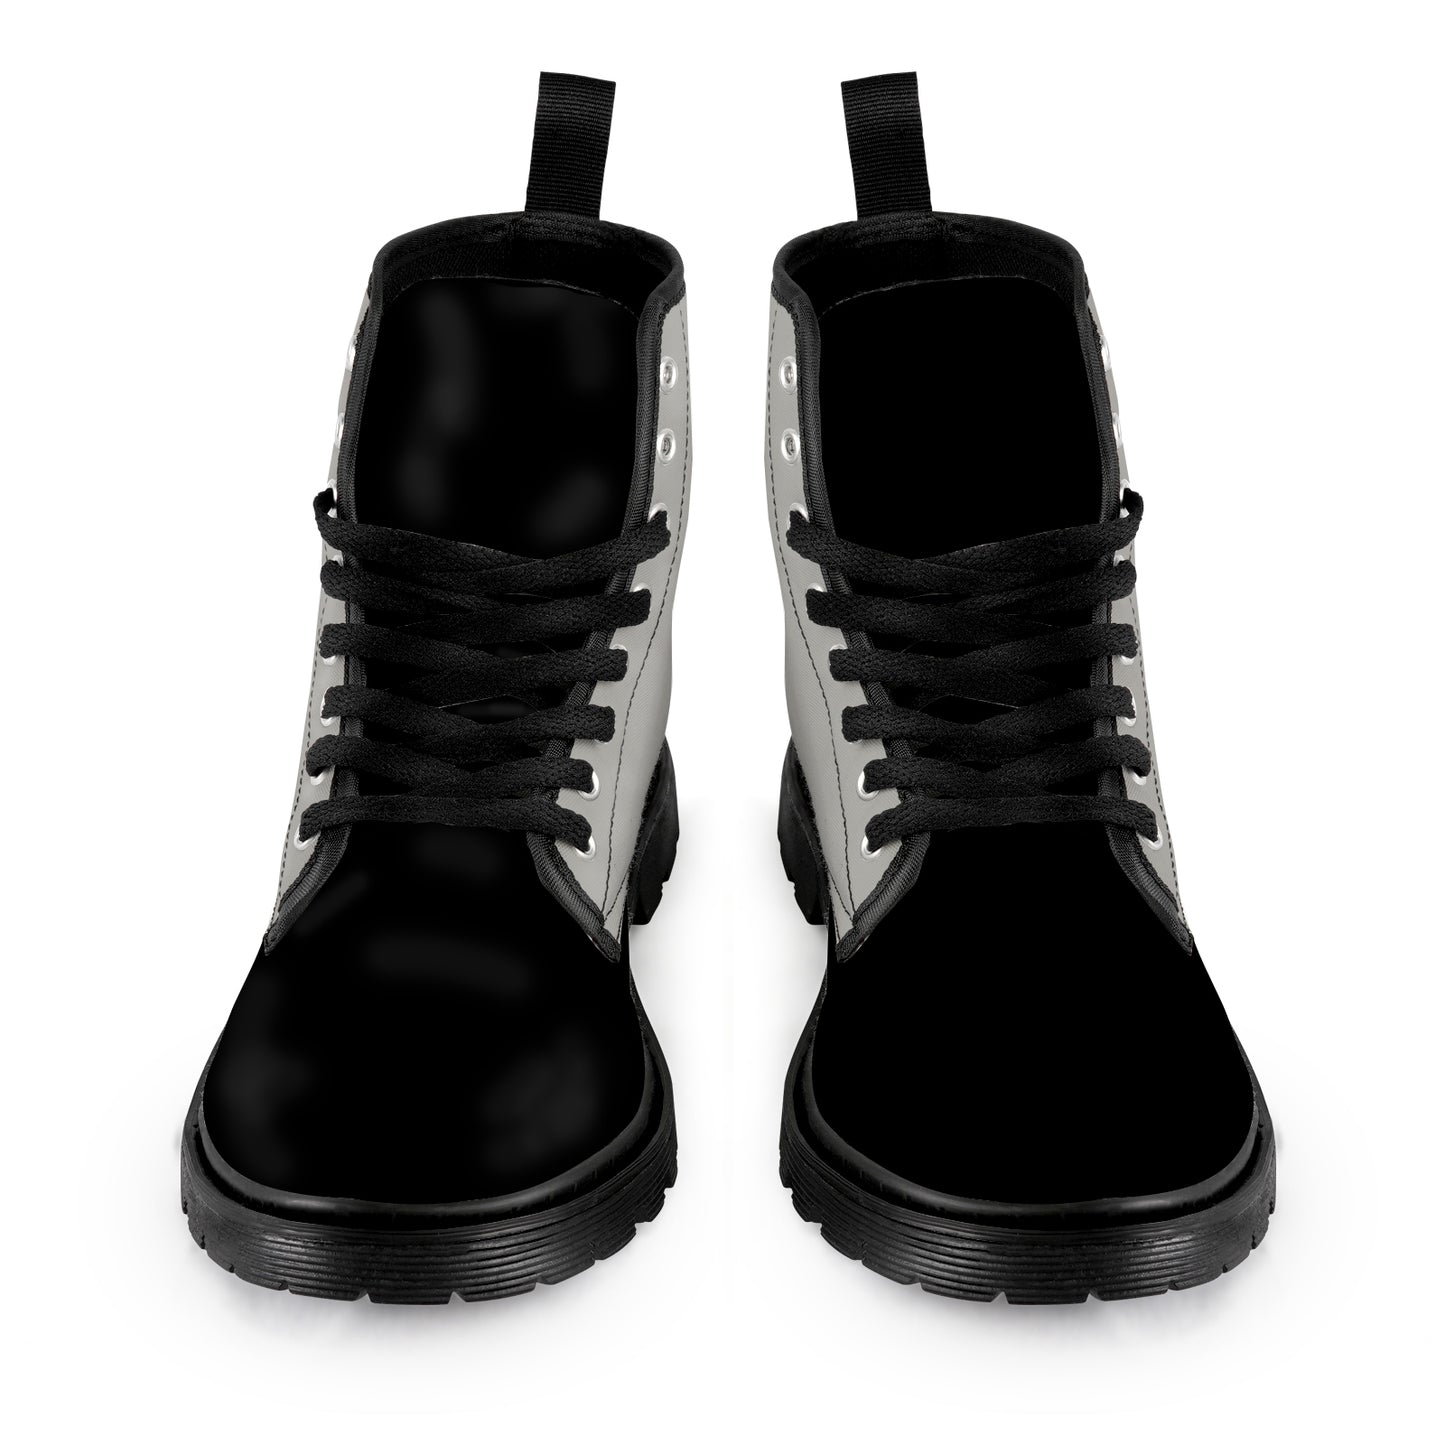 Men's Lace Up Canvas Boots - Grey/Black Combo